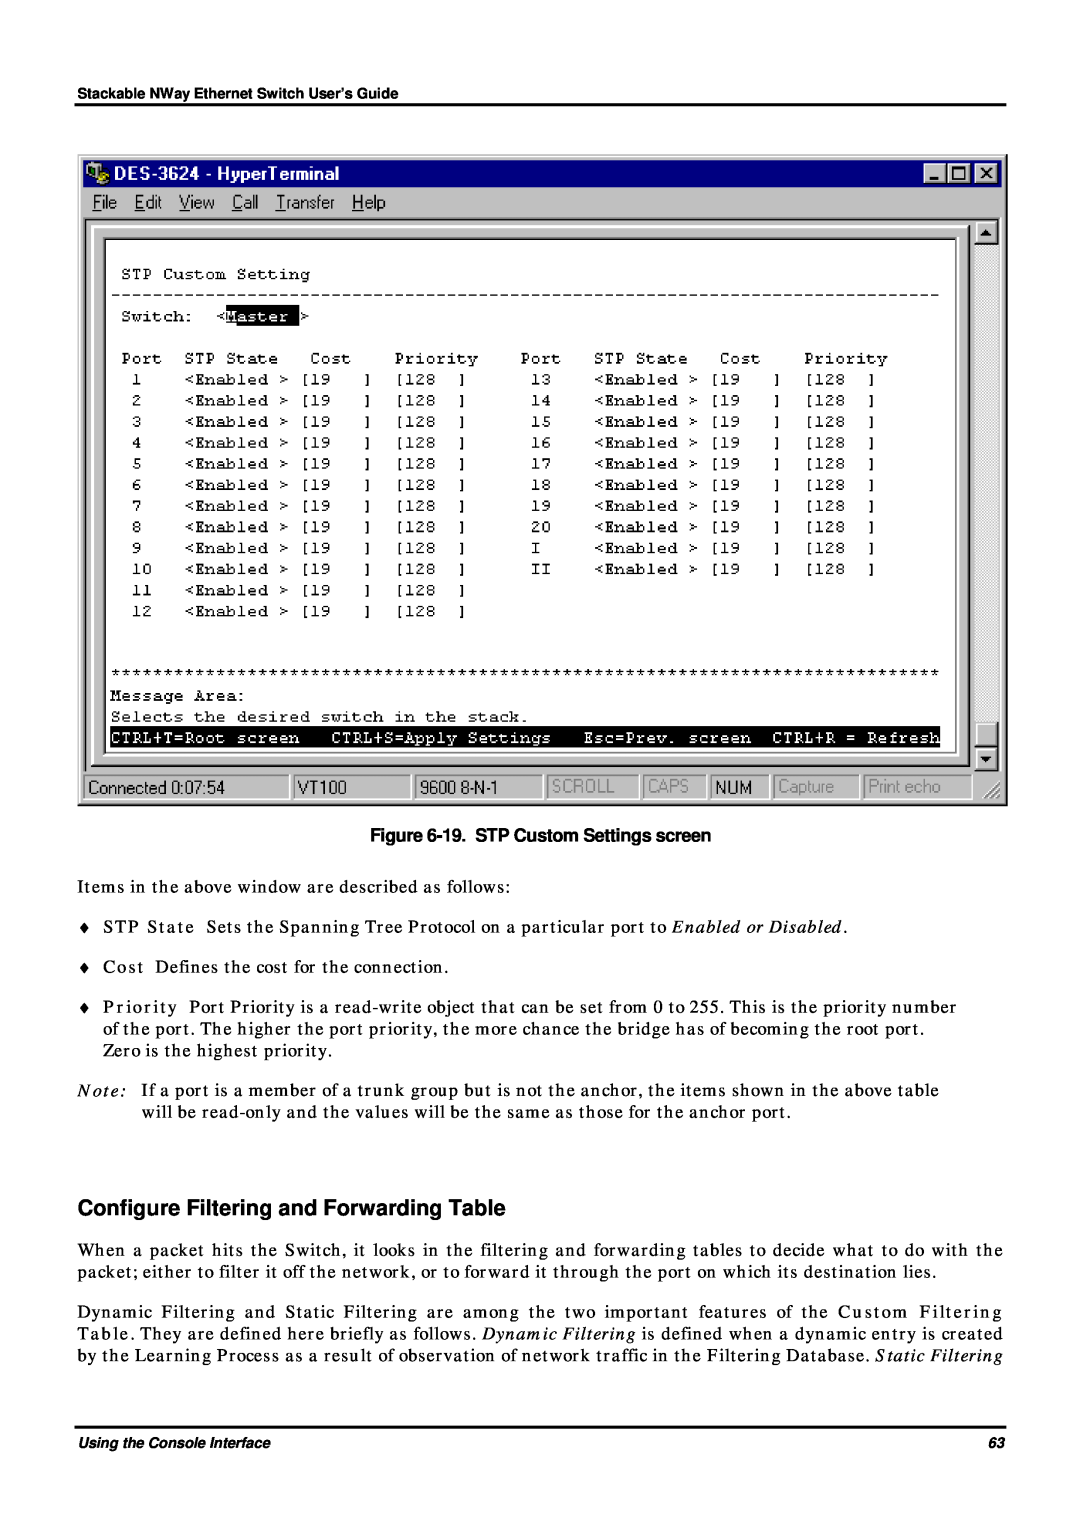 D-Link DES-3624 manual Configure Filtering and Forwarding Table, 19. STP Custom Settings screen 